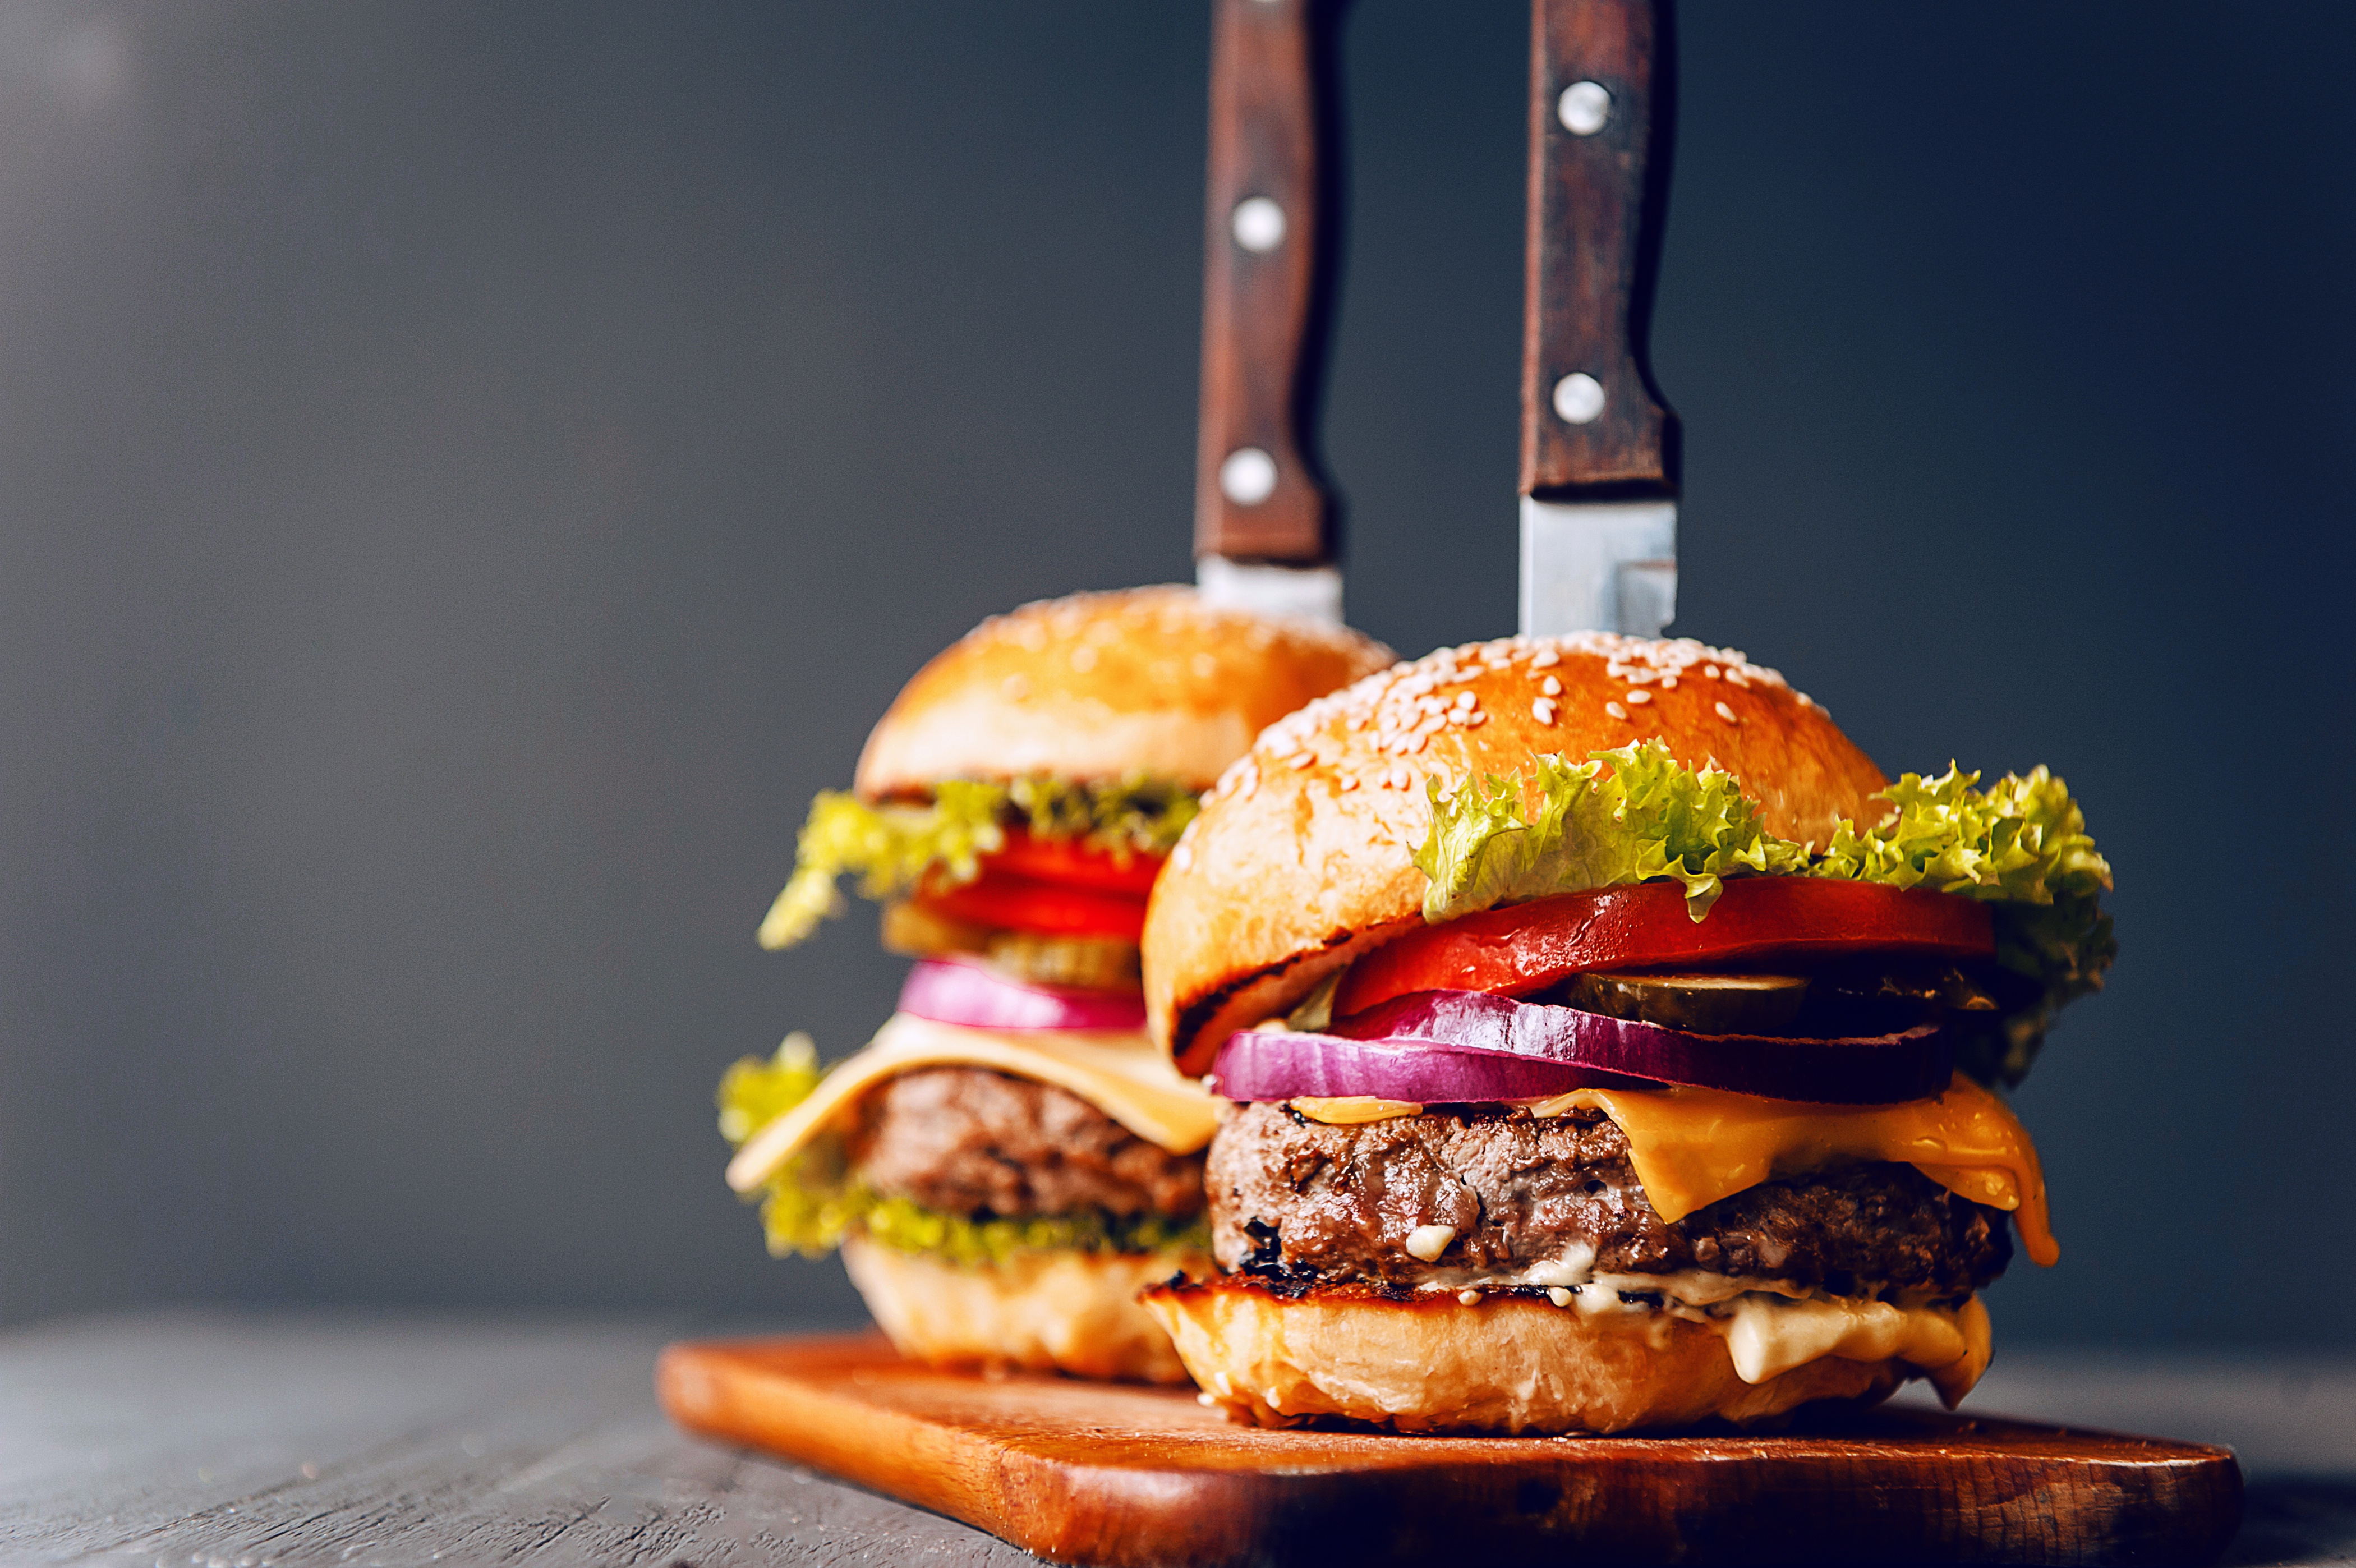  Burger 4k Ultra HD Wallpaper Background Image 